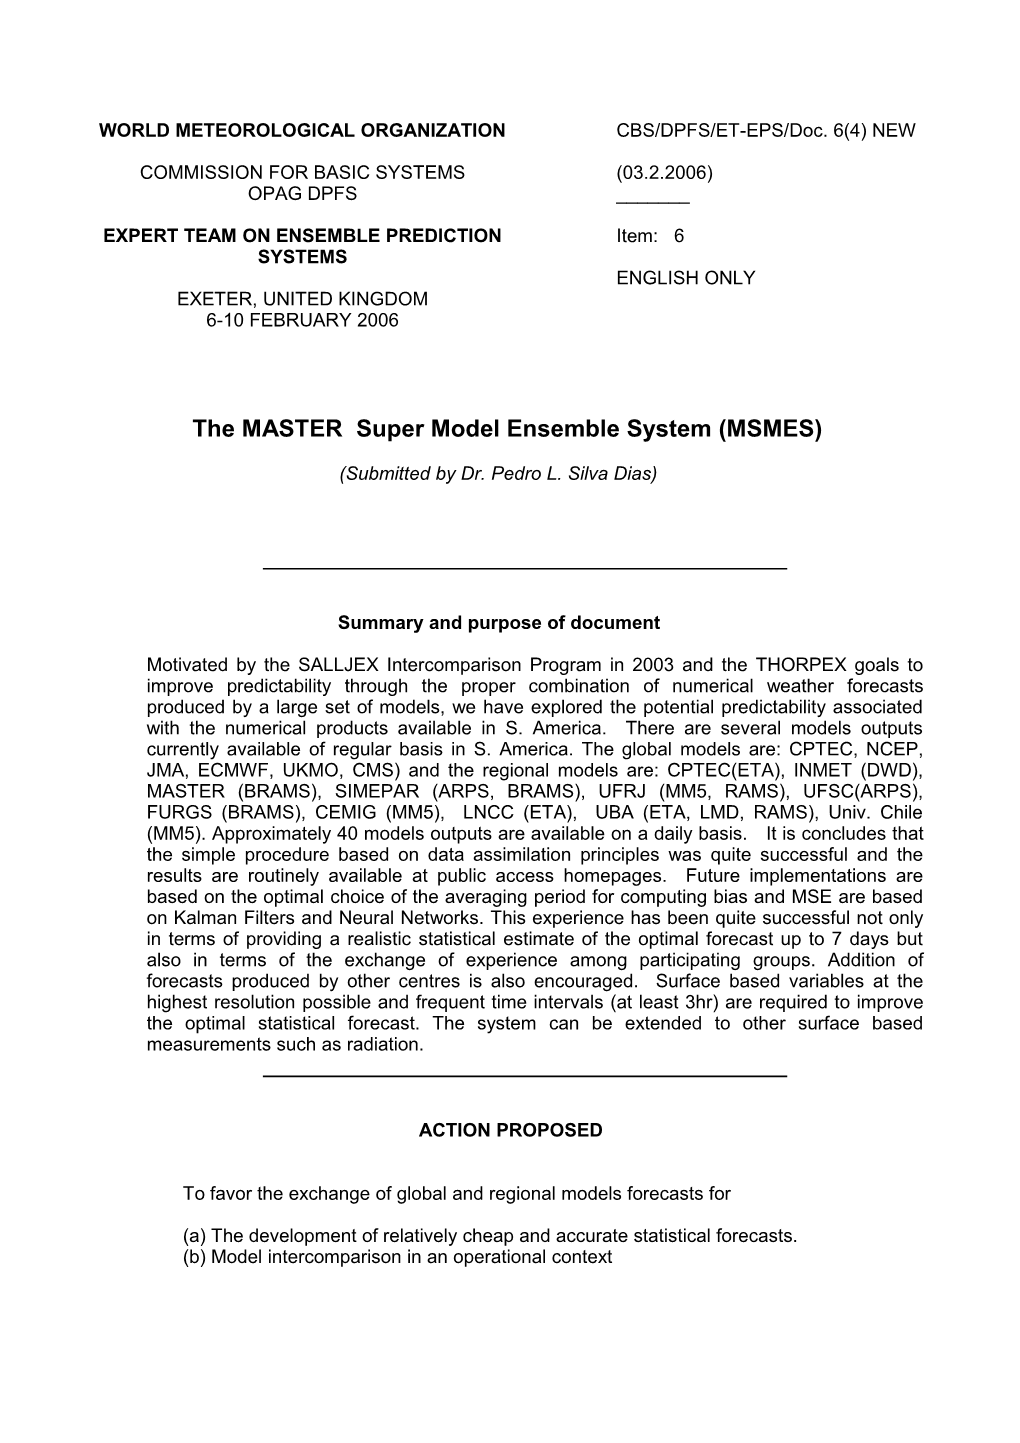 The MASTER Super Model Ensemble System (MSMES)